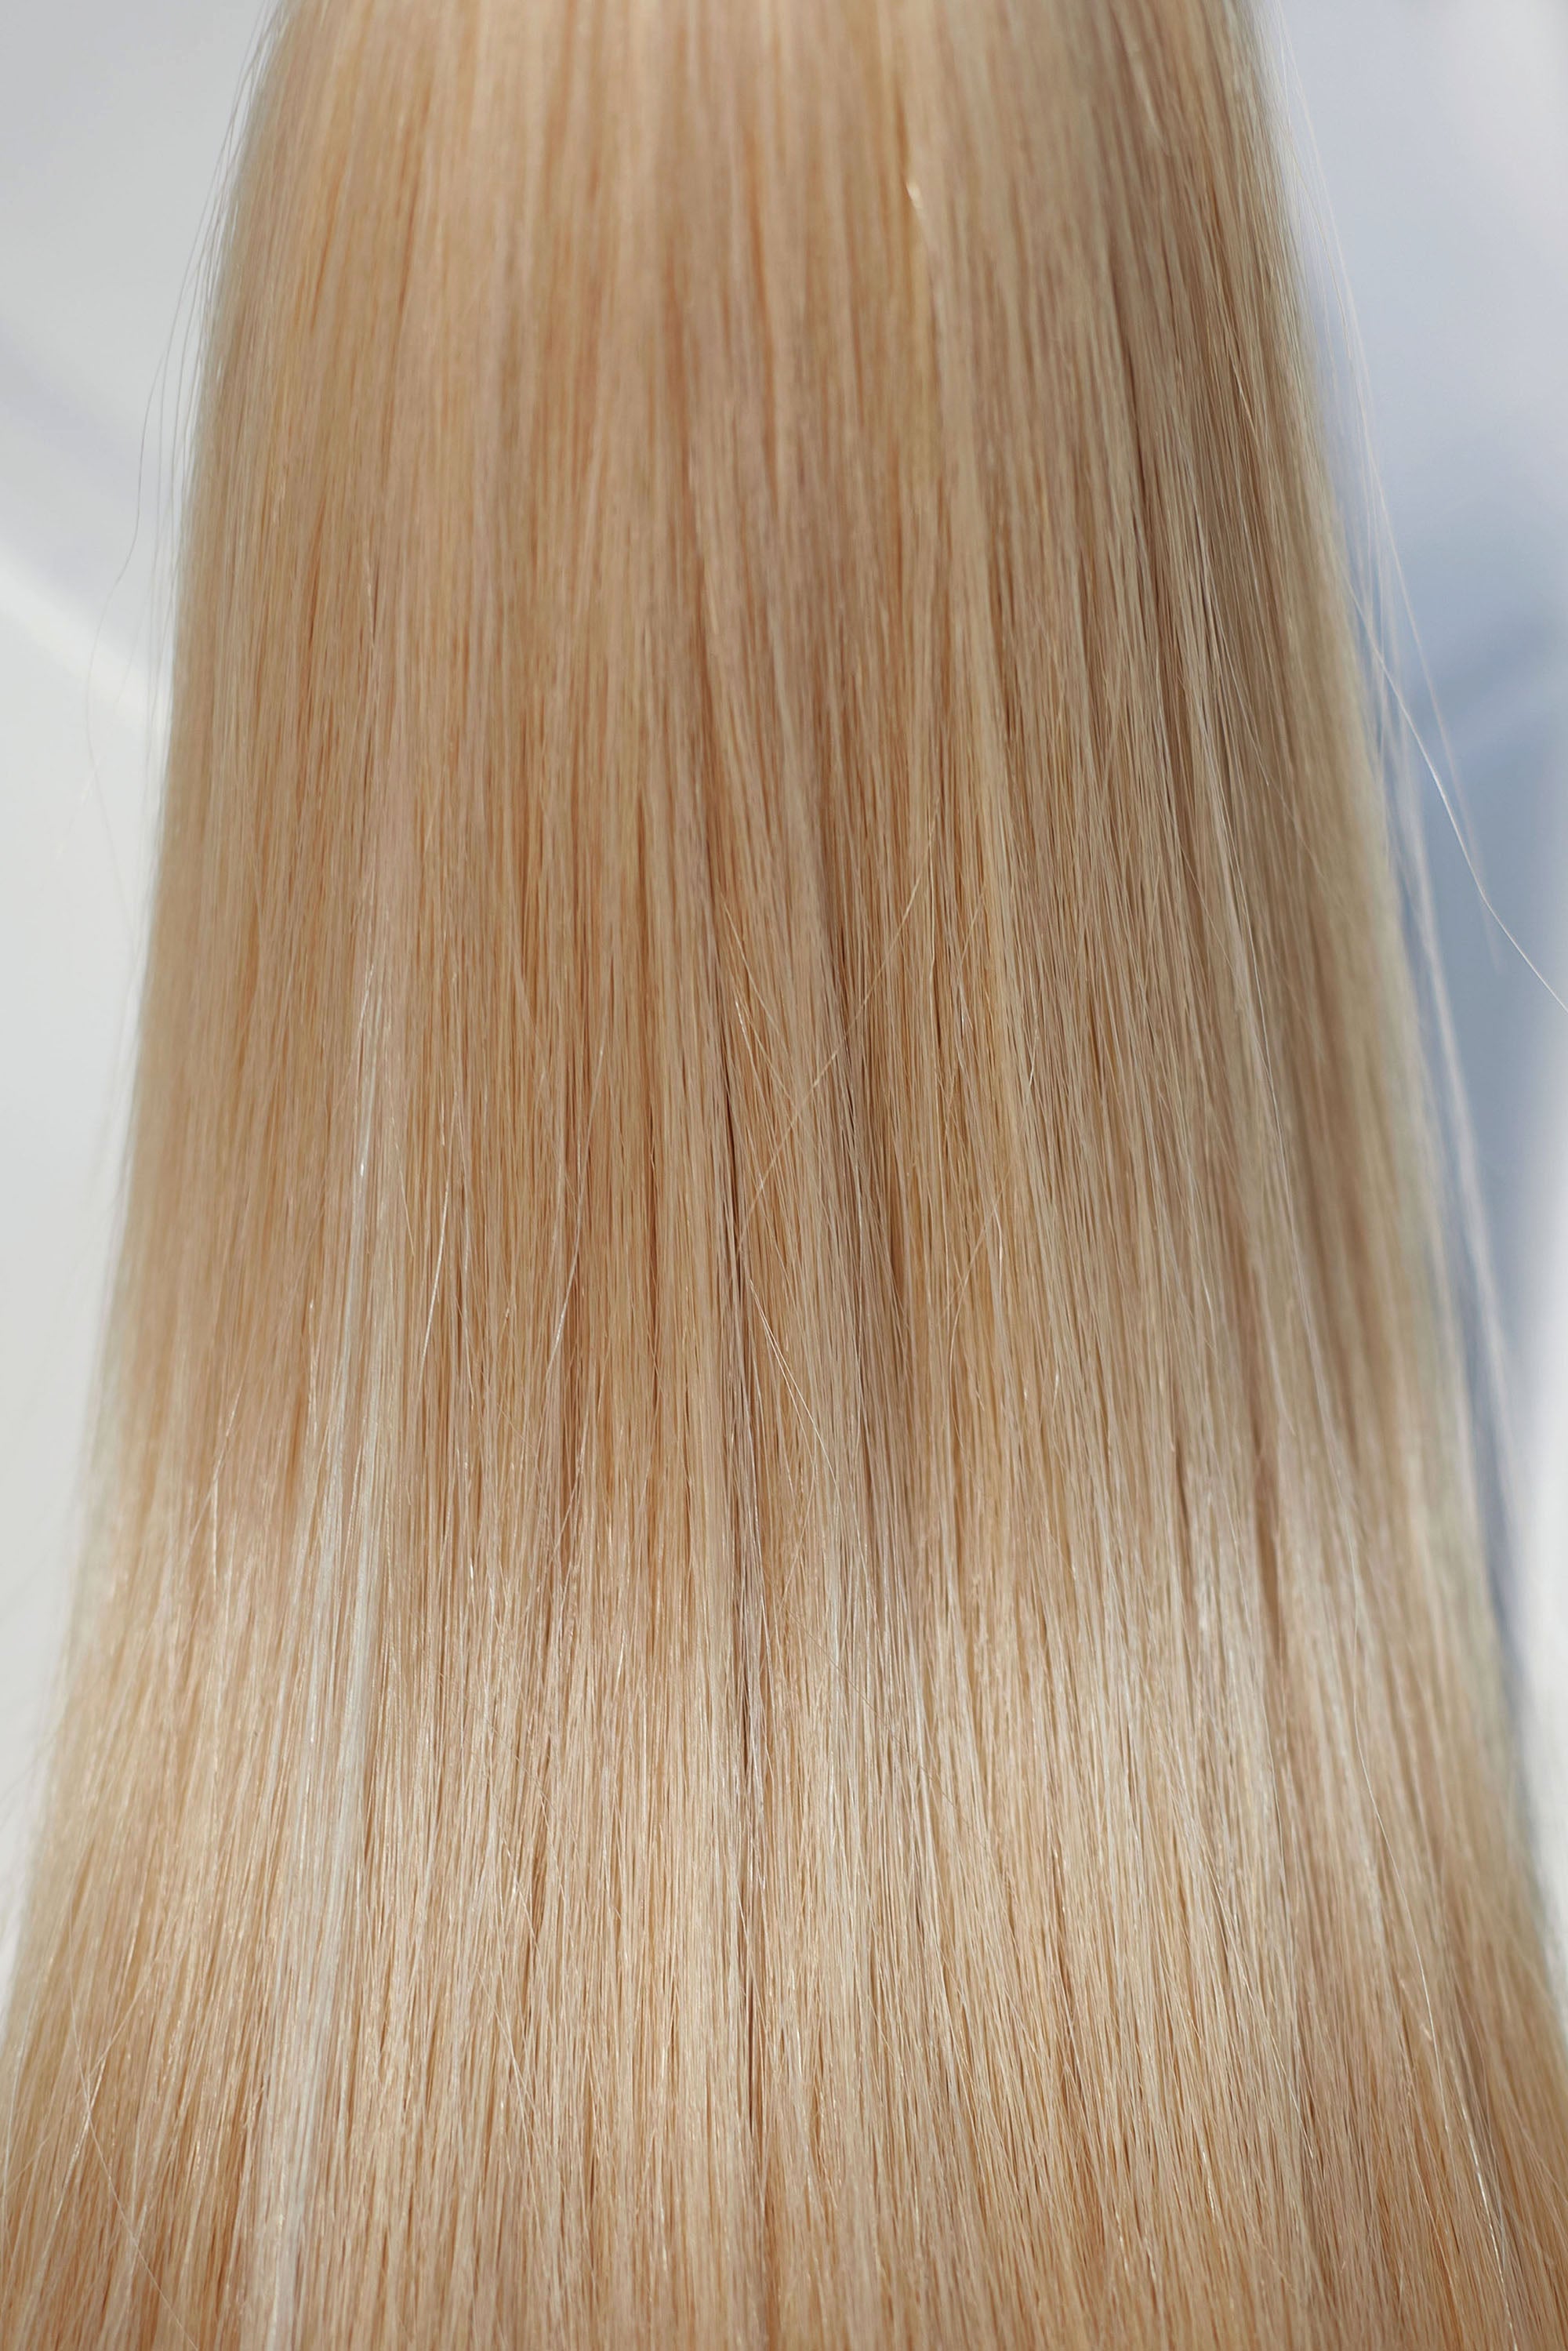 Behair professional Keratin Tip "Premium" 26" (65cm) Natural Straight Light Gold Blond #24 - 25g (1g each pcs) hair extensions